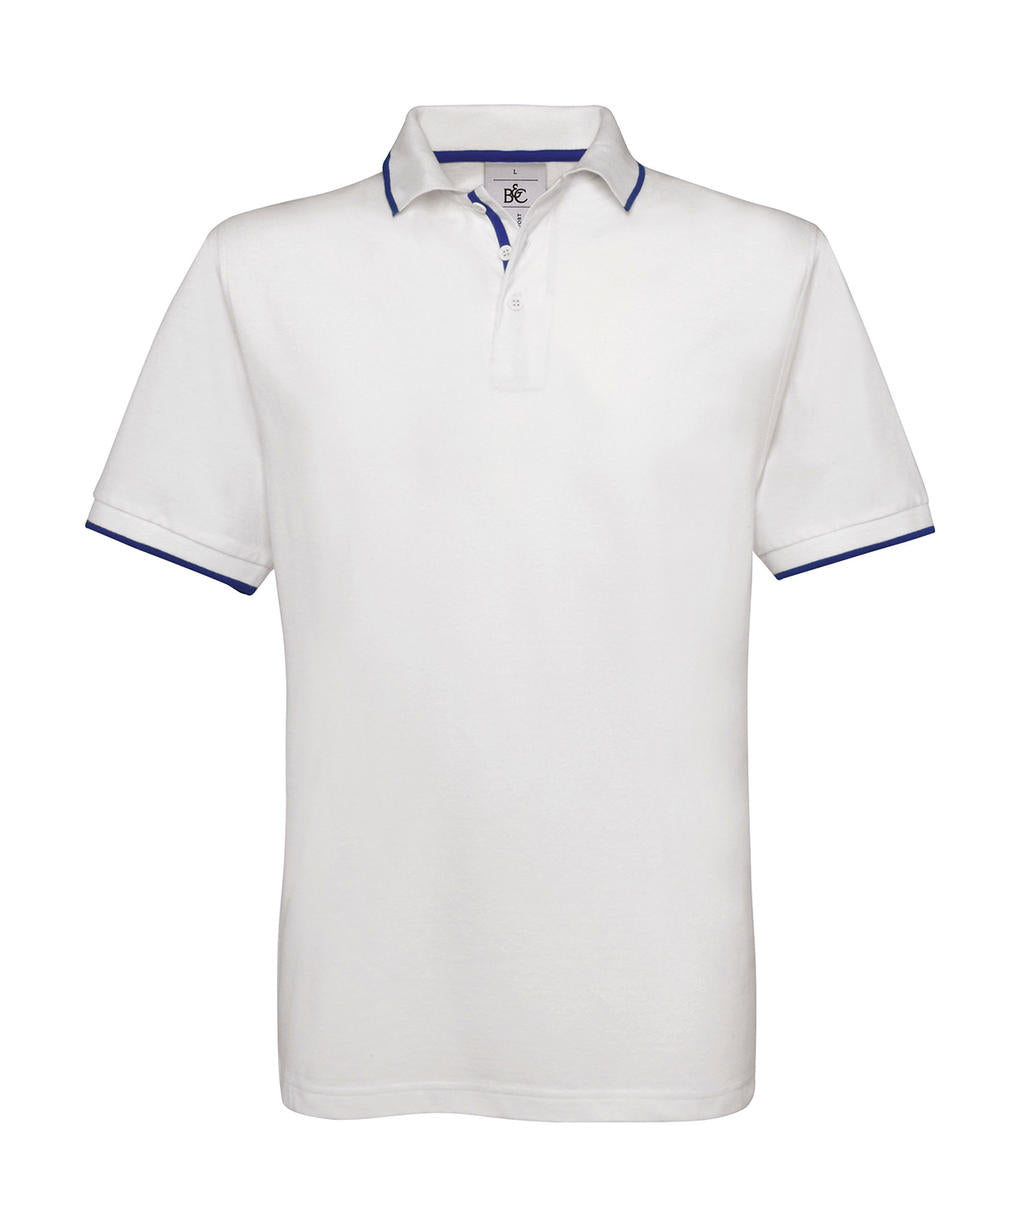 B&C Herren Poloshirt kurzarm Polo Shirt Polohemd T-Shirt Kontrast